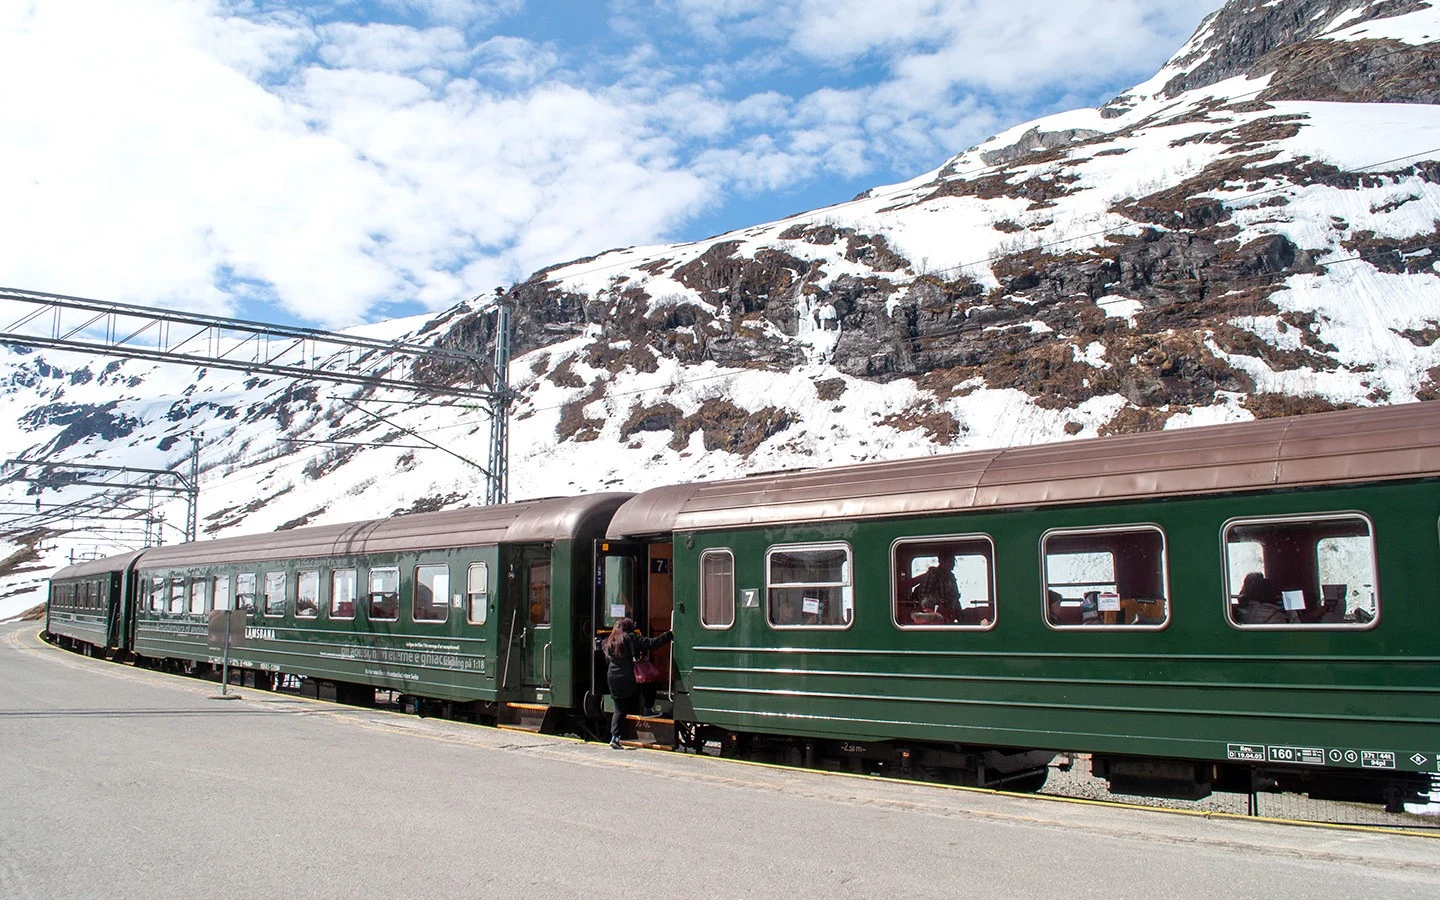 The Flamsbana scenic train in Norway